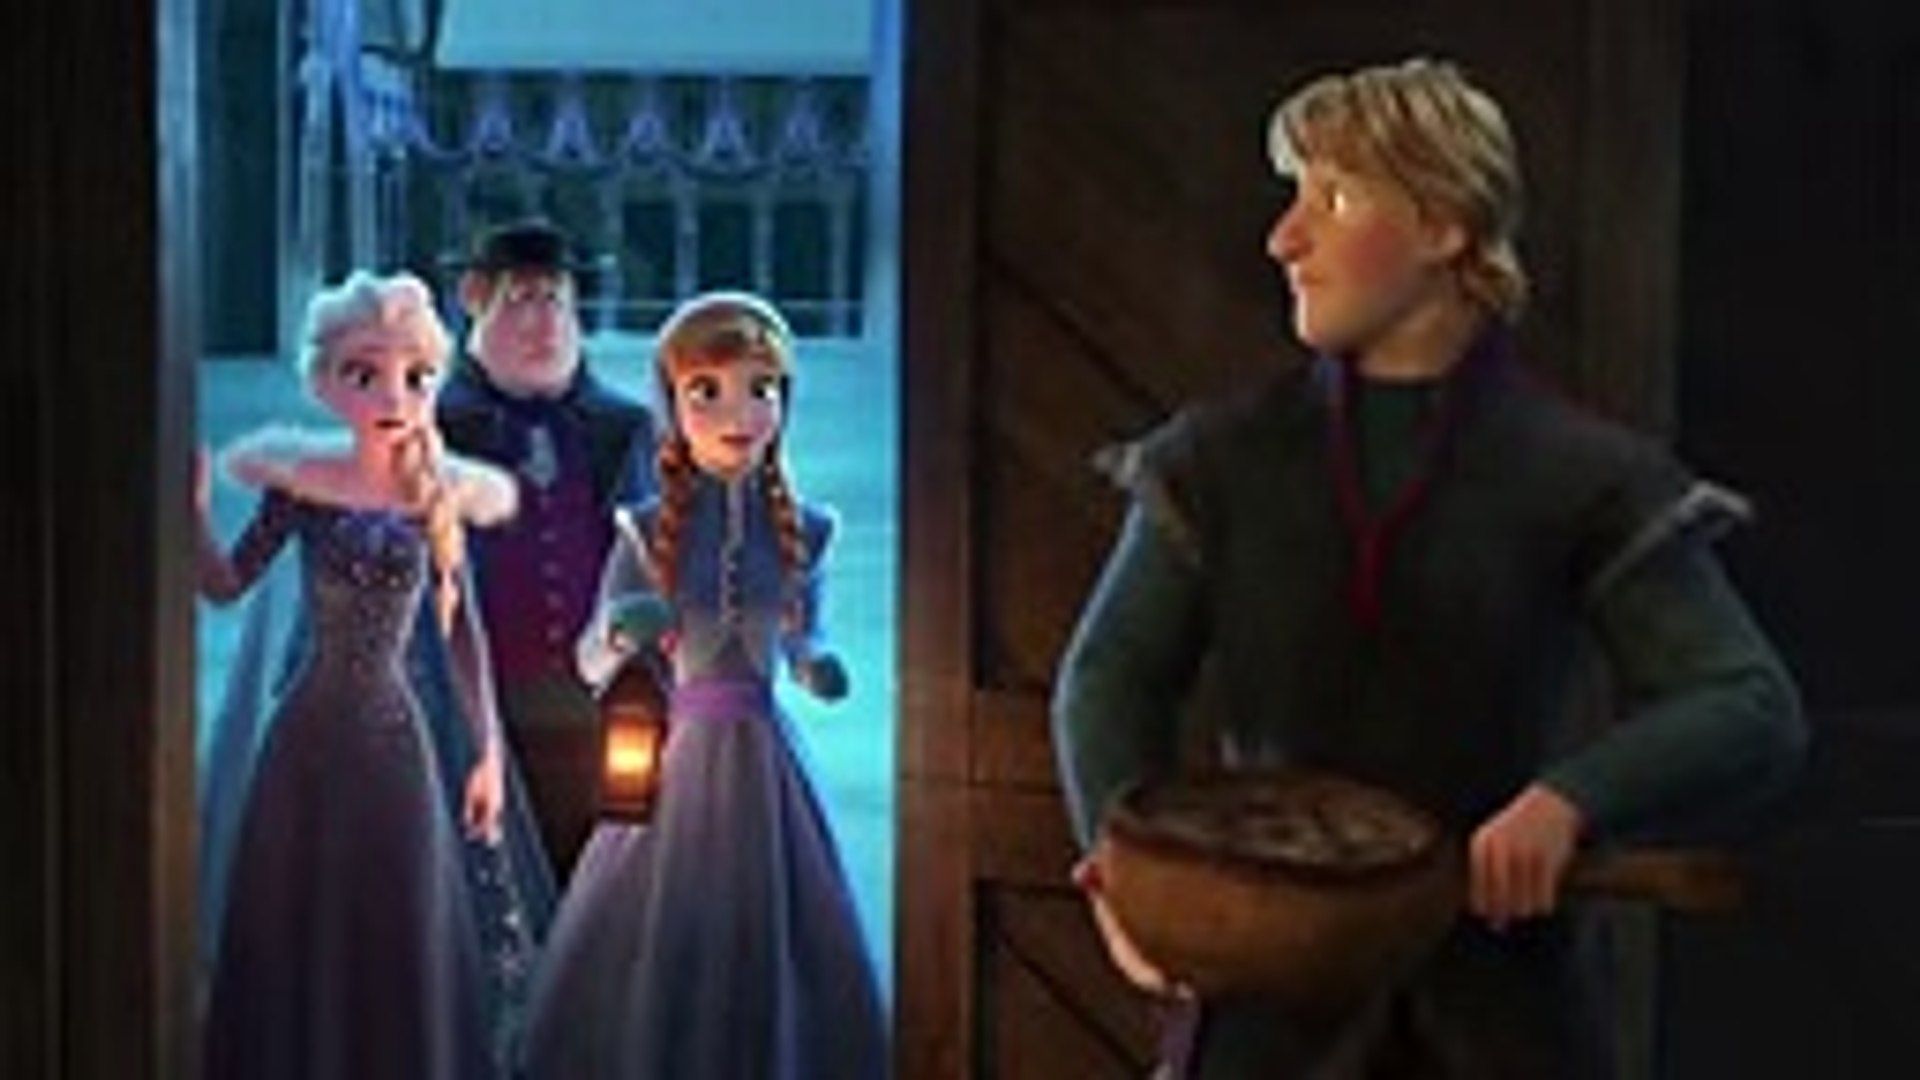 OLAF'S FROZEN ADVENTURE Movie 'When We're Together' (2017) Frozen 2 Disney Animated Movie (HD)